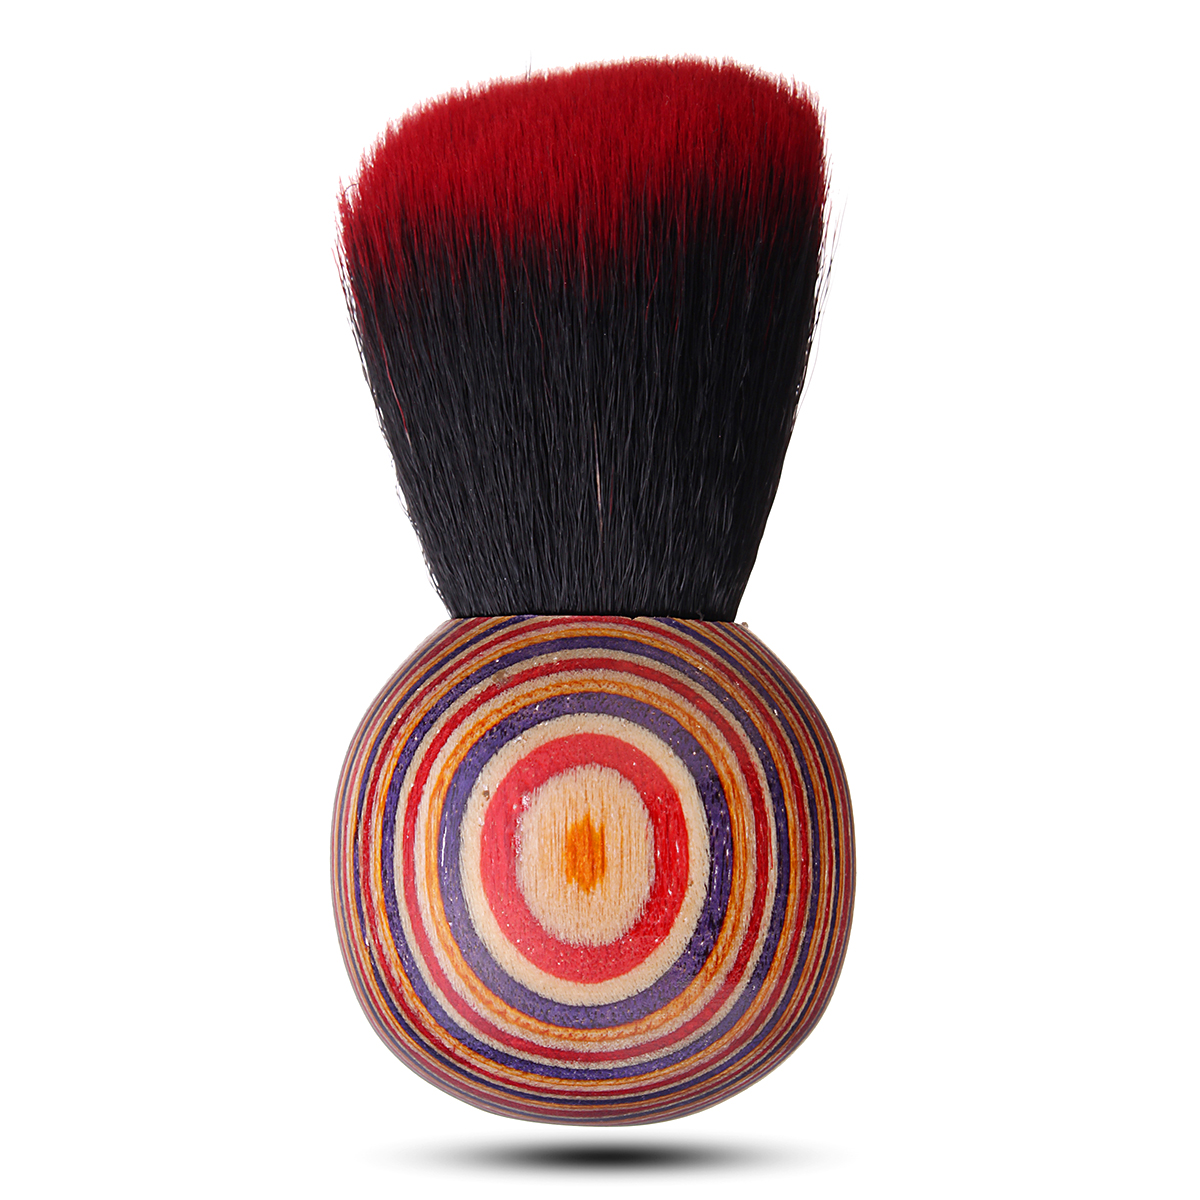 Folk-Style-Wooden-Makeup-Brush-Blush-Loose-Powder-Cosmetic-Tools-1119267